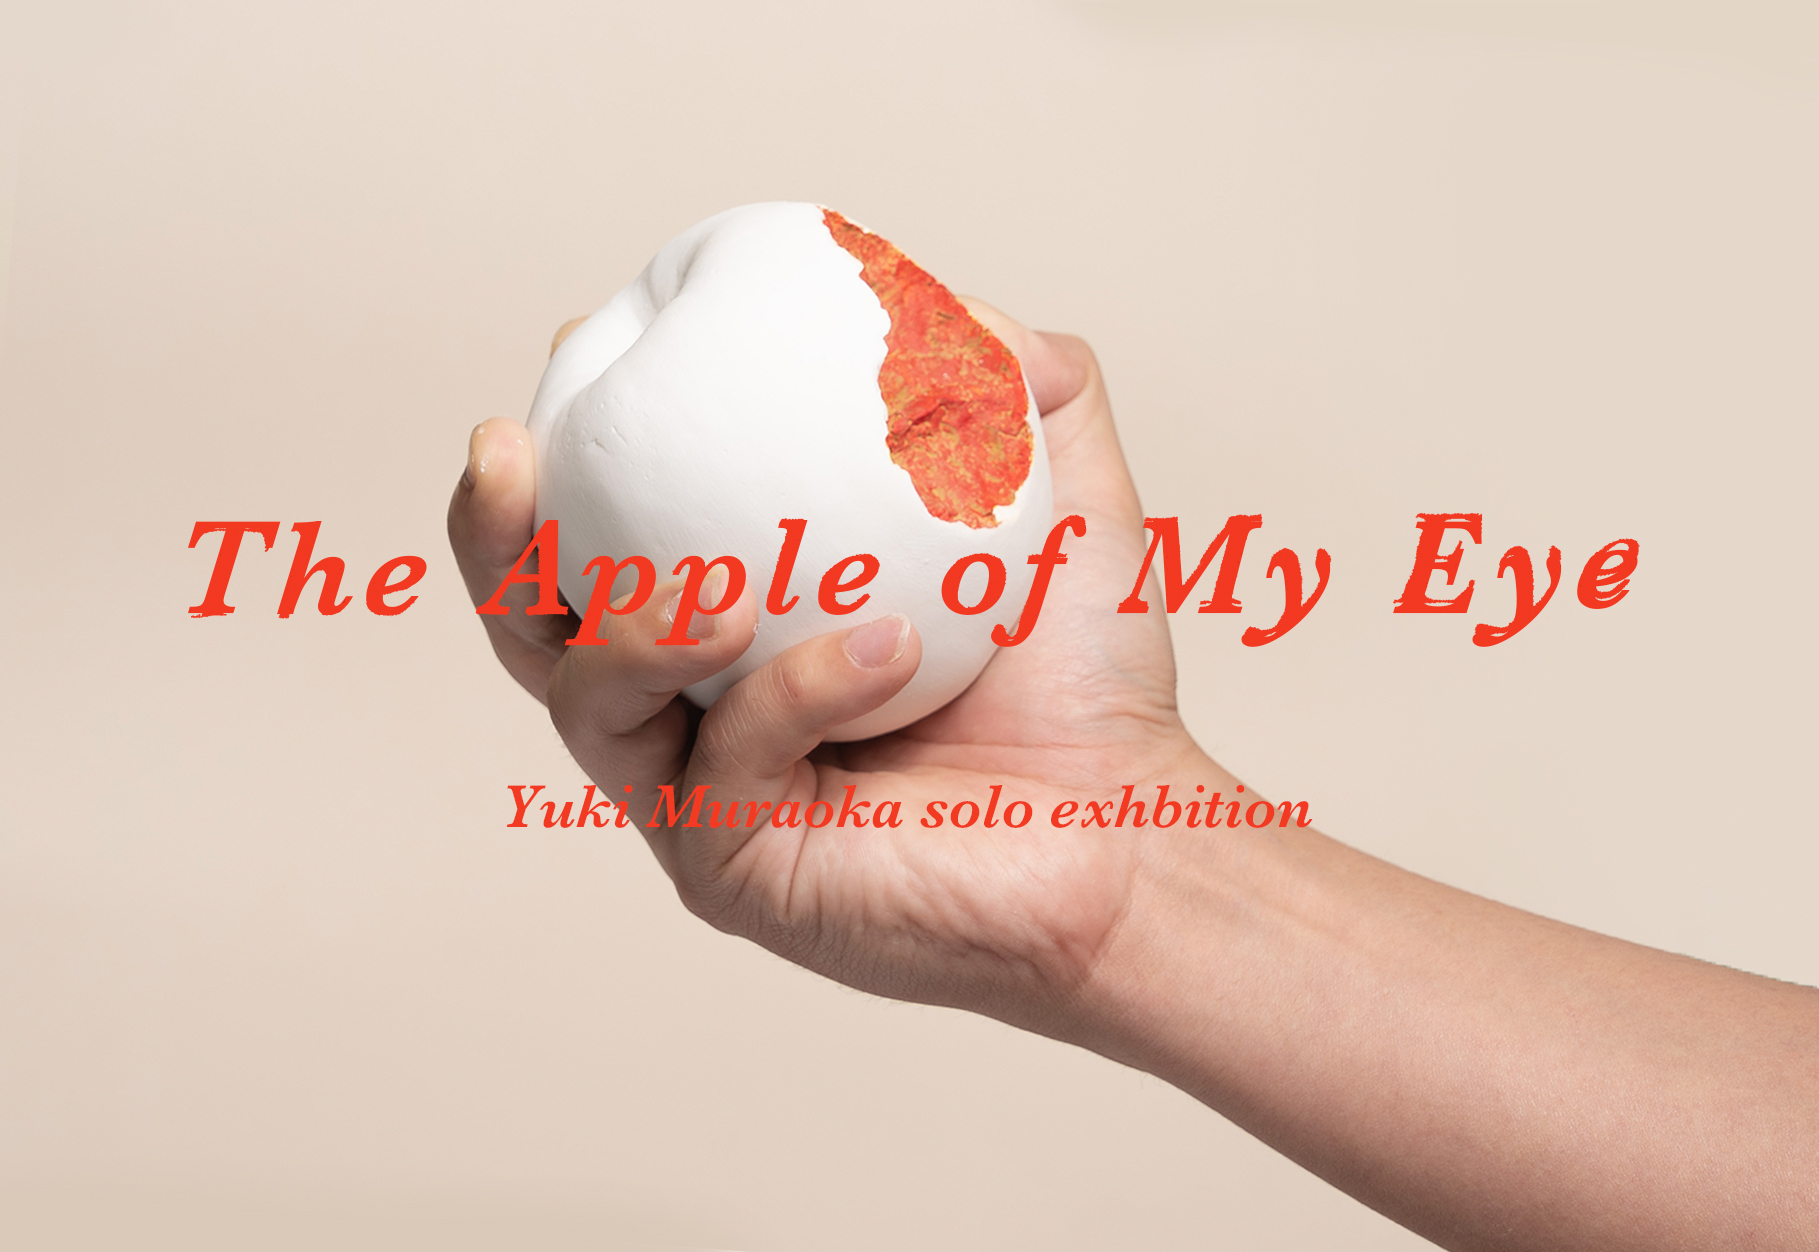 Exhibition Information